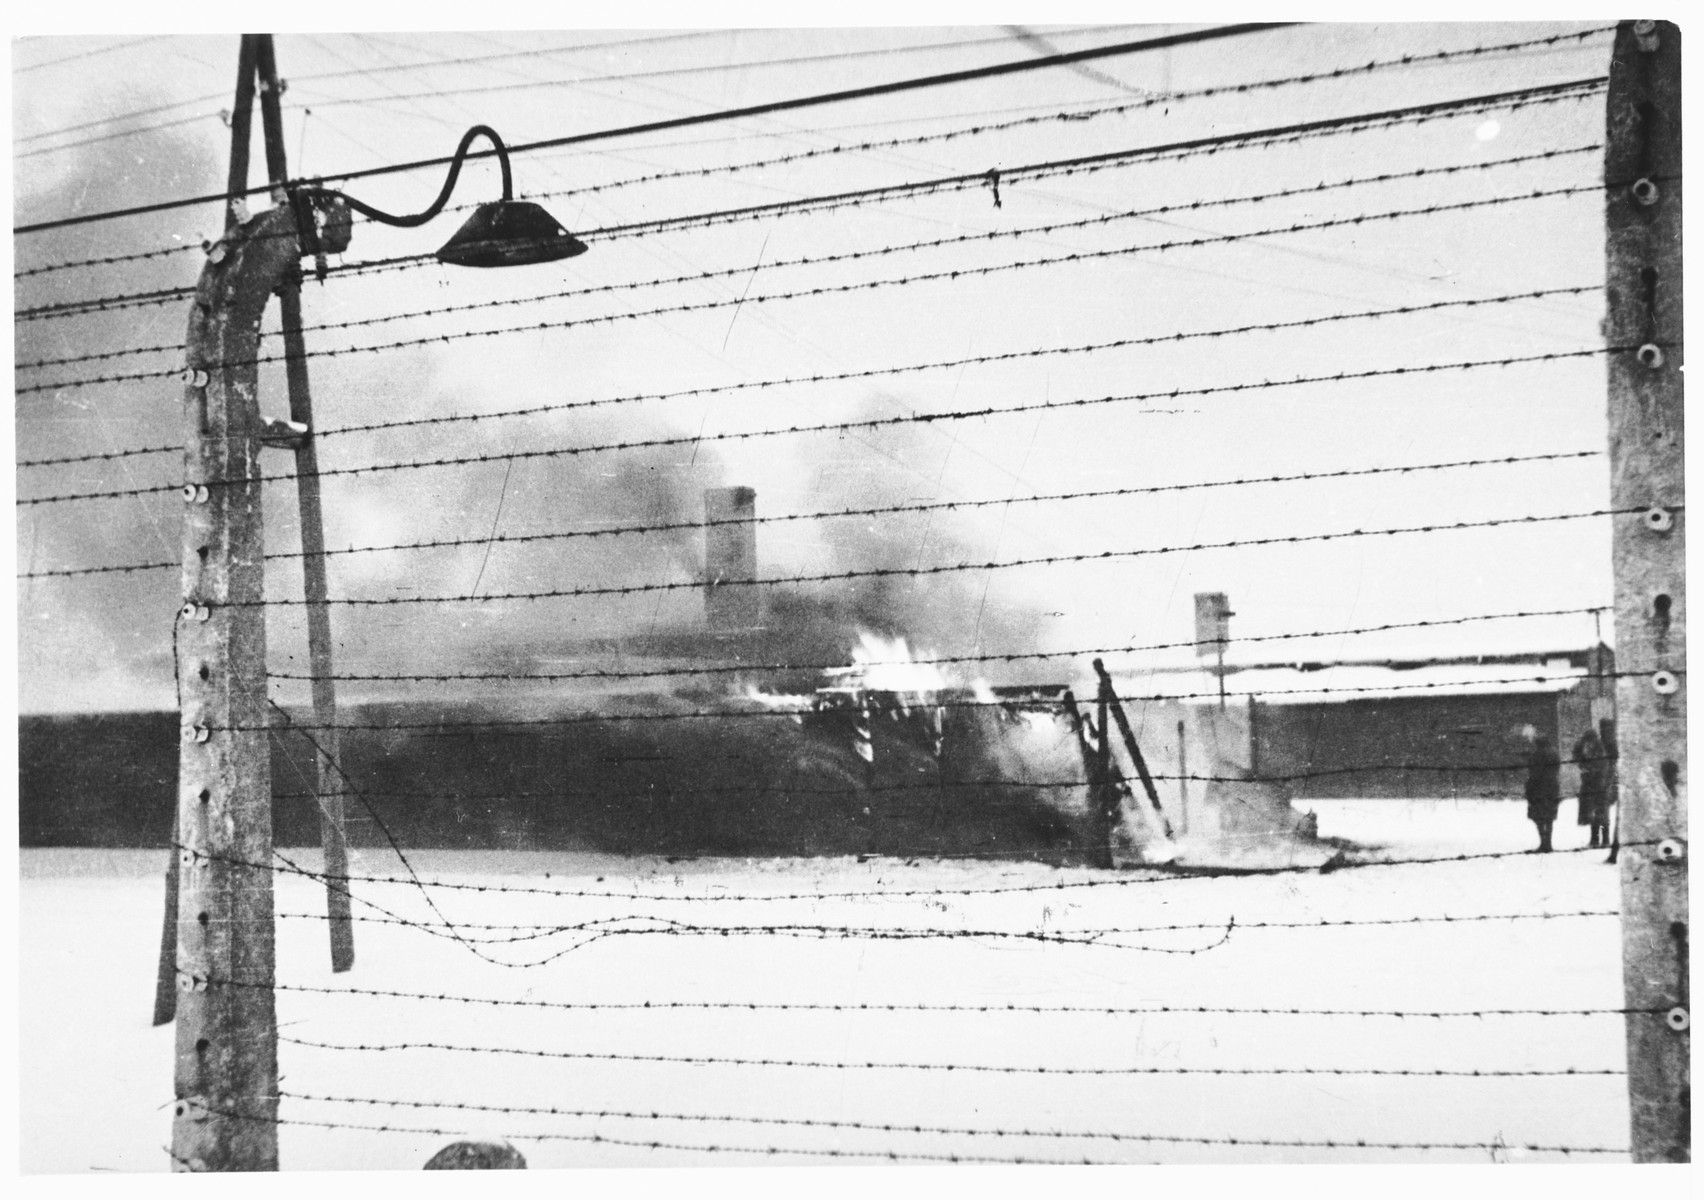 Burning ‘Kanada’ barracks in Auschwitz-Birkenau, late January 1945.